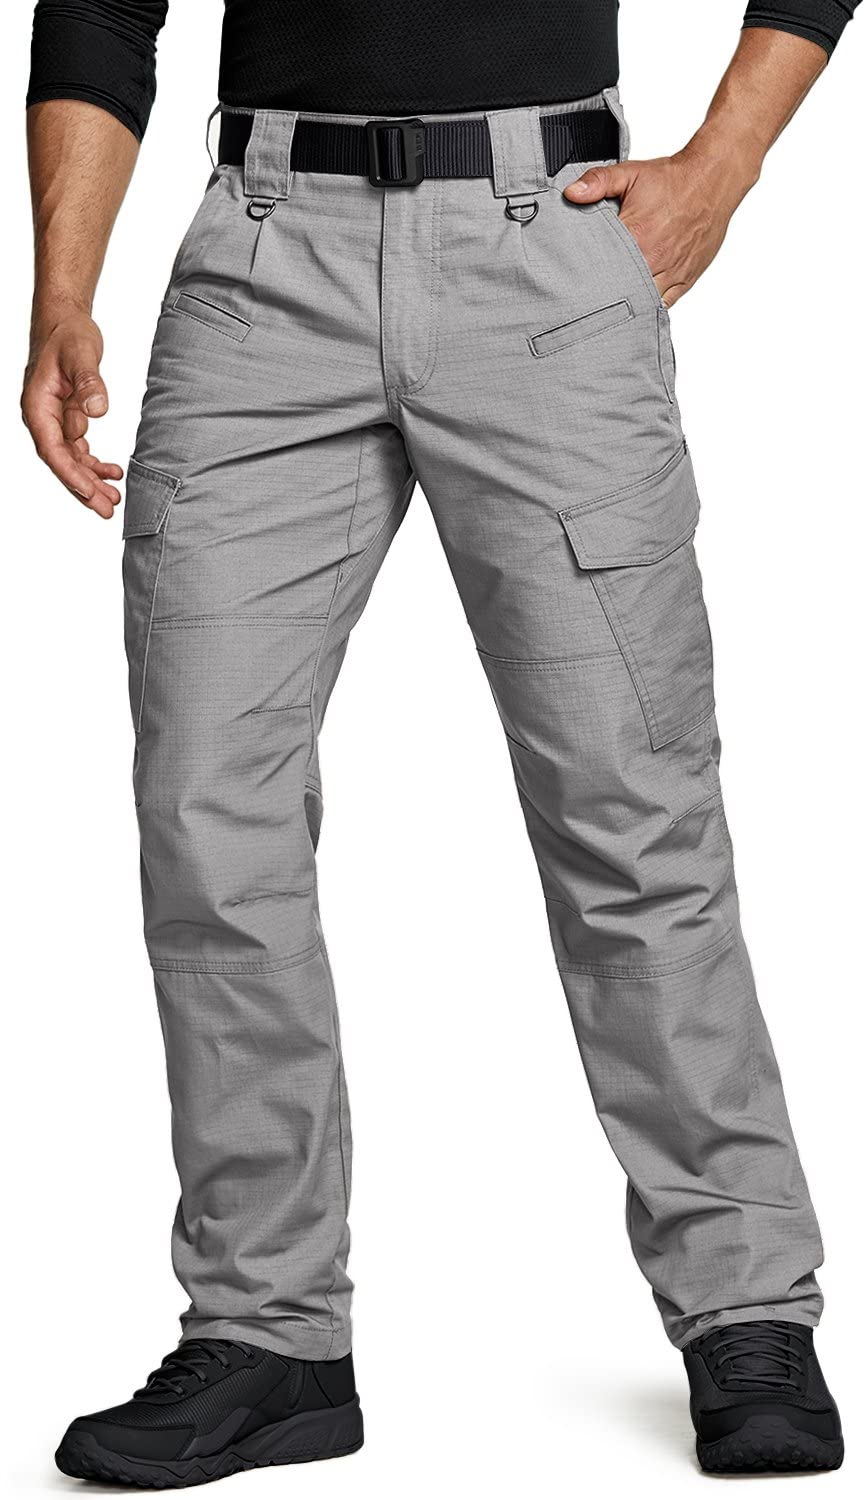 CQR Men's Tactical Pants, Water Resistant Ripstop Cargo Pants, Lightweight EDC Hiking Work Pants, Outdoor Apparel, Ripstop Stone, 32W x 32L